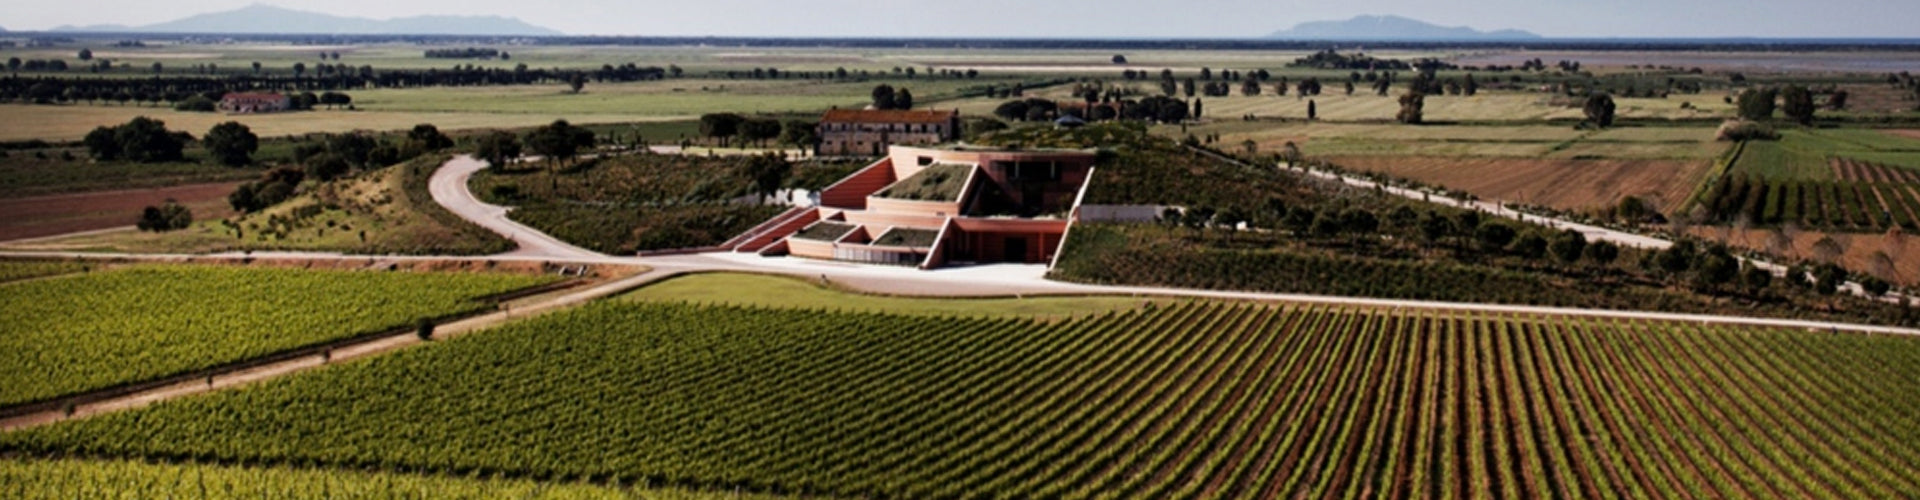 Antinori's Le Mortelle Winery and Vineyards in Maremma, Tuscany